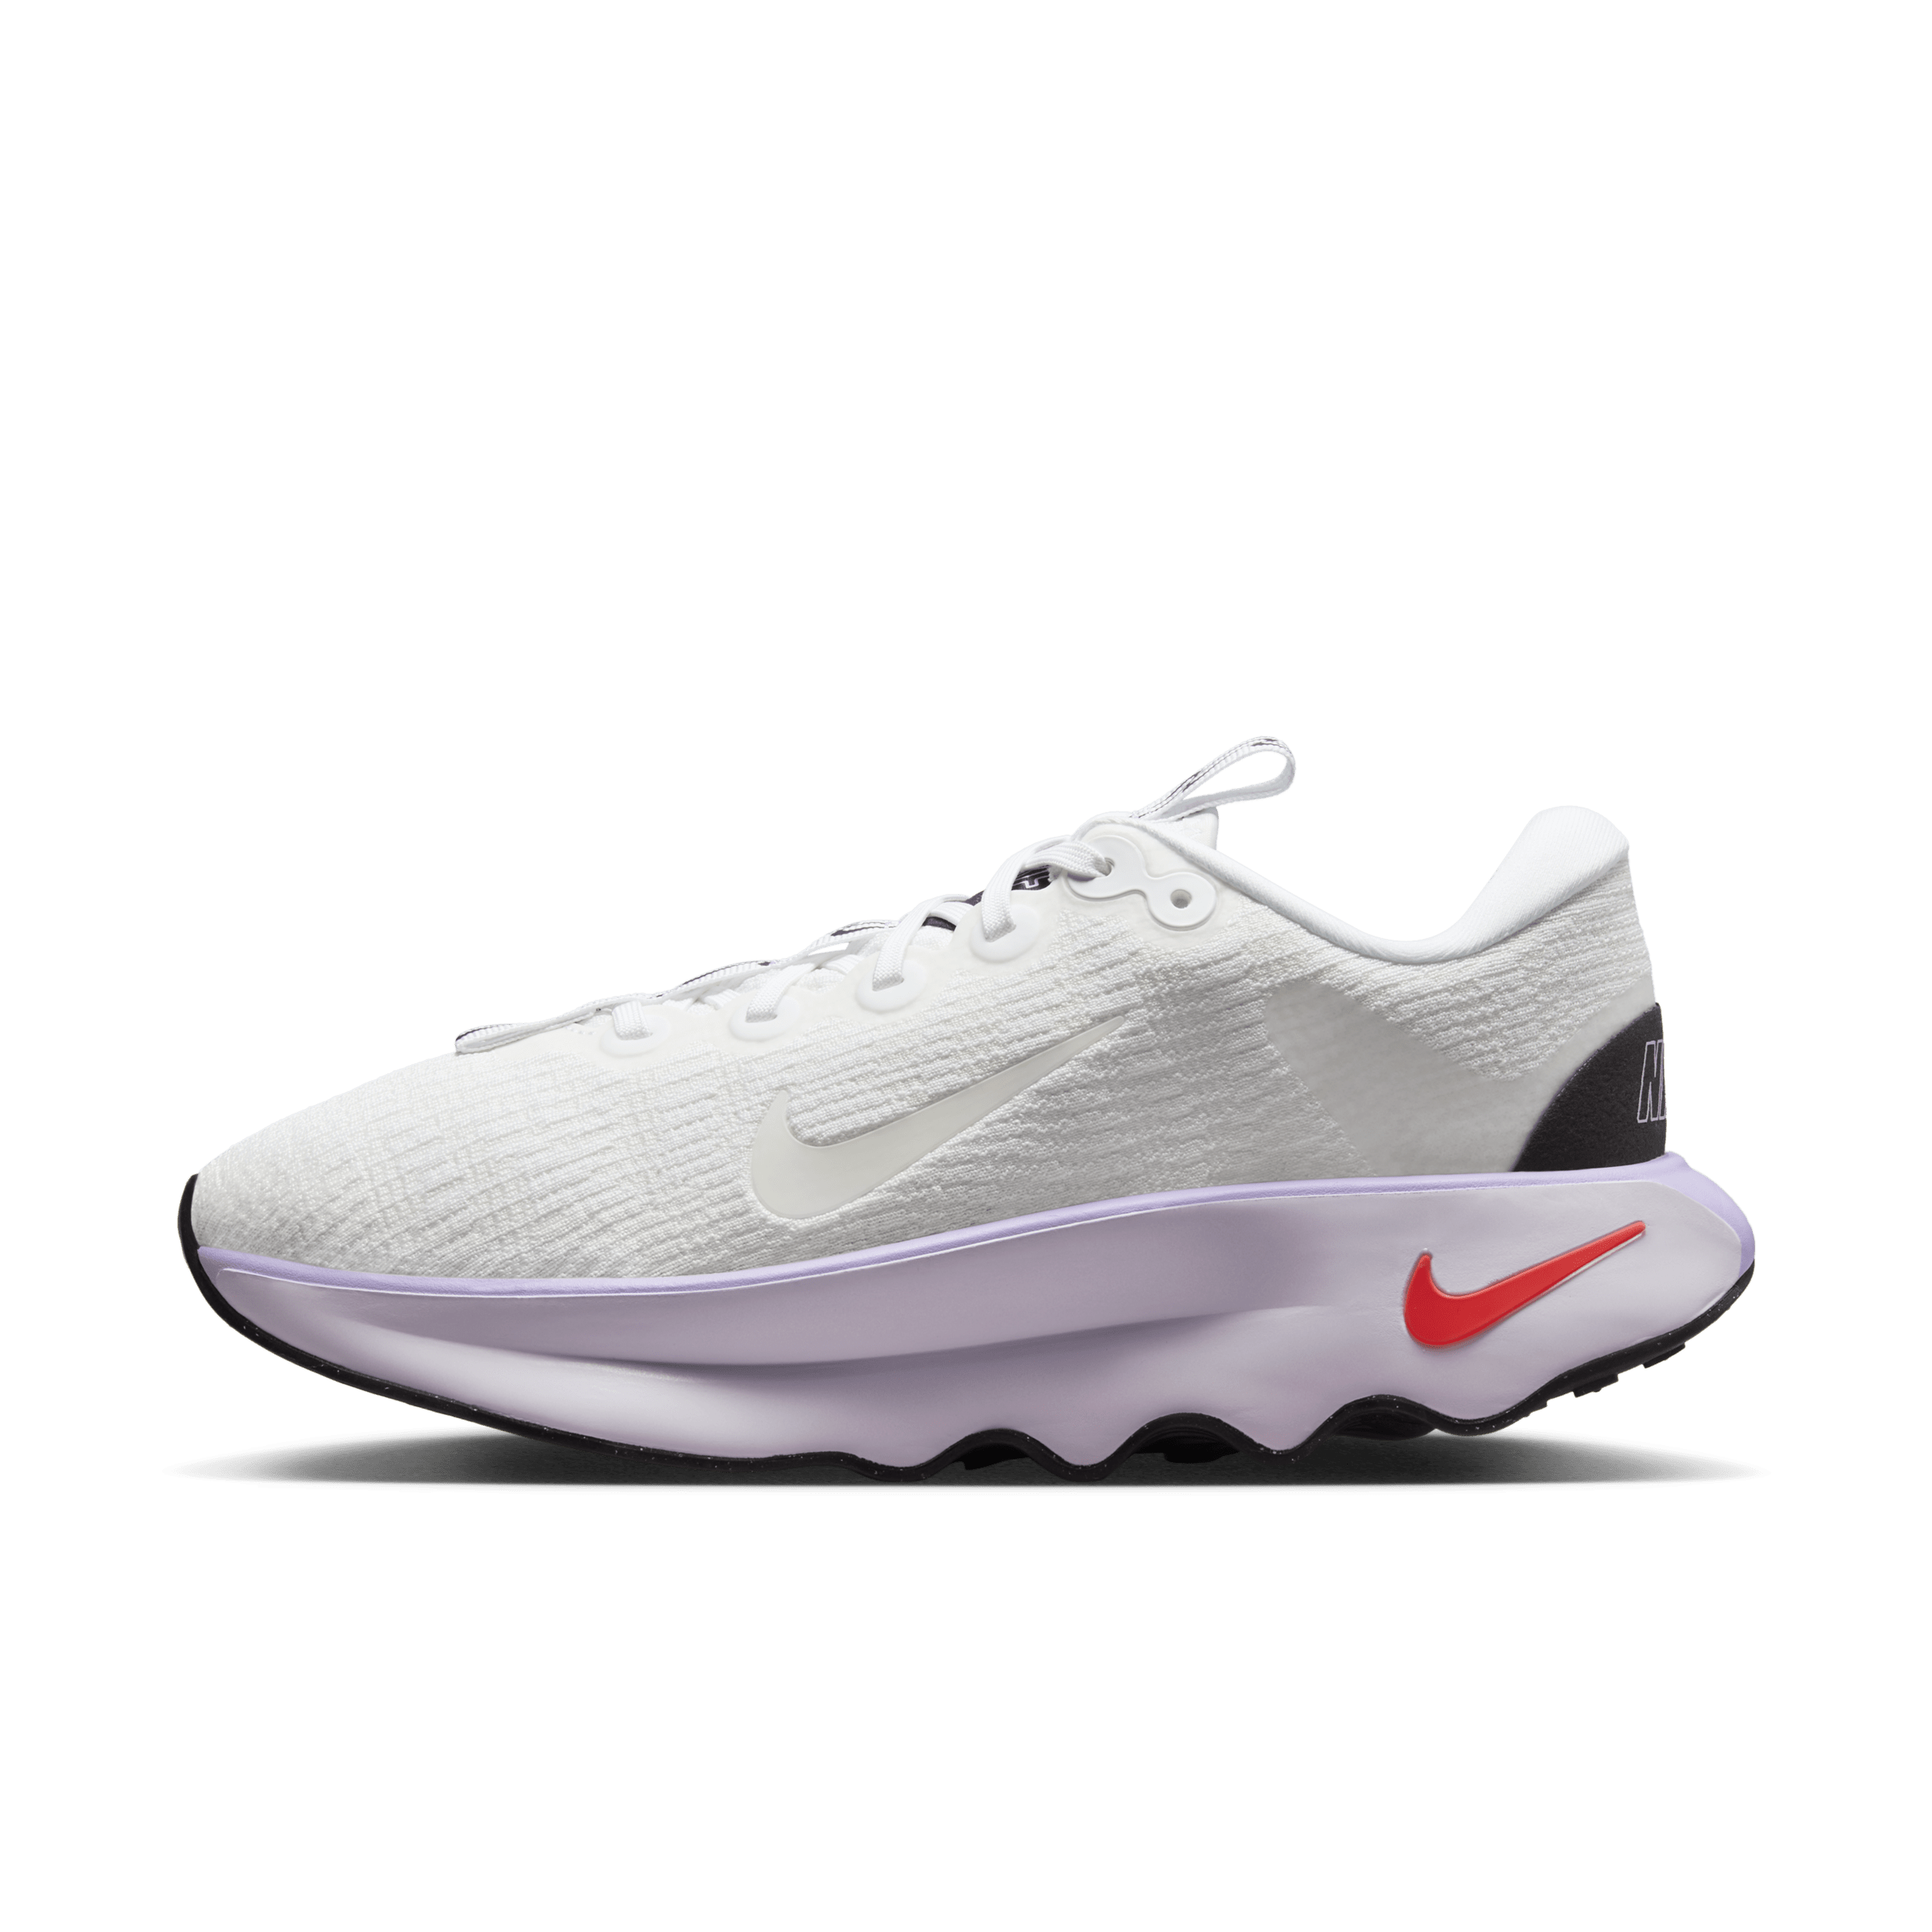 Nike Motiva Zapatillas para caminar - Mujer - Blanco